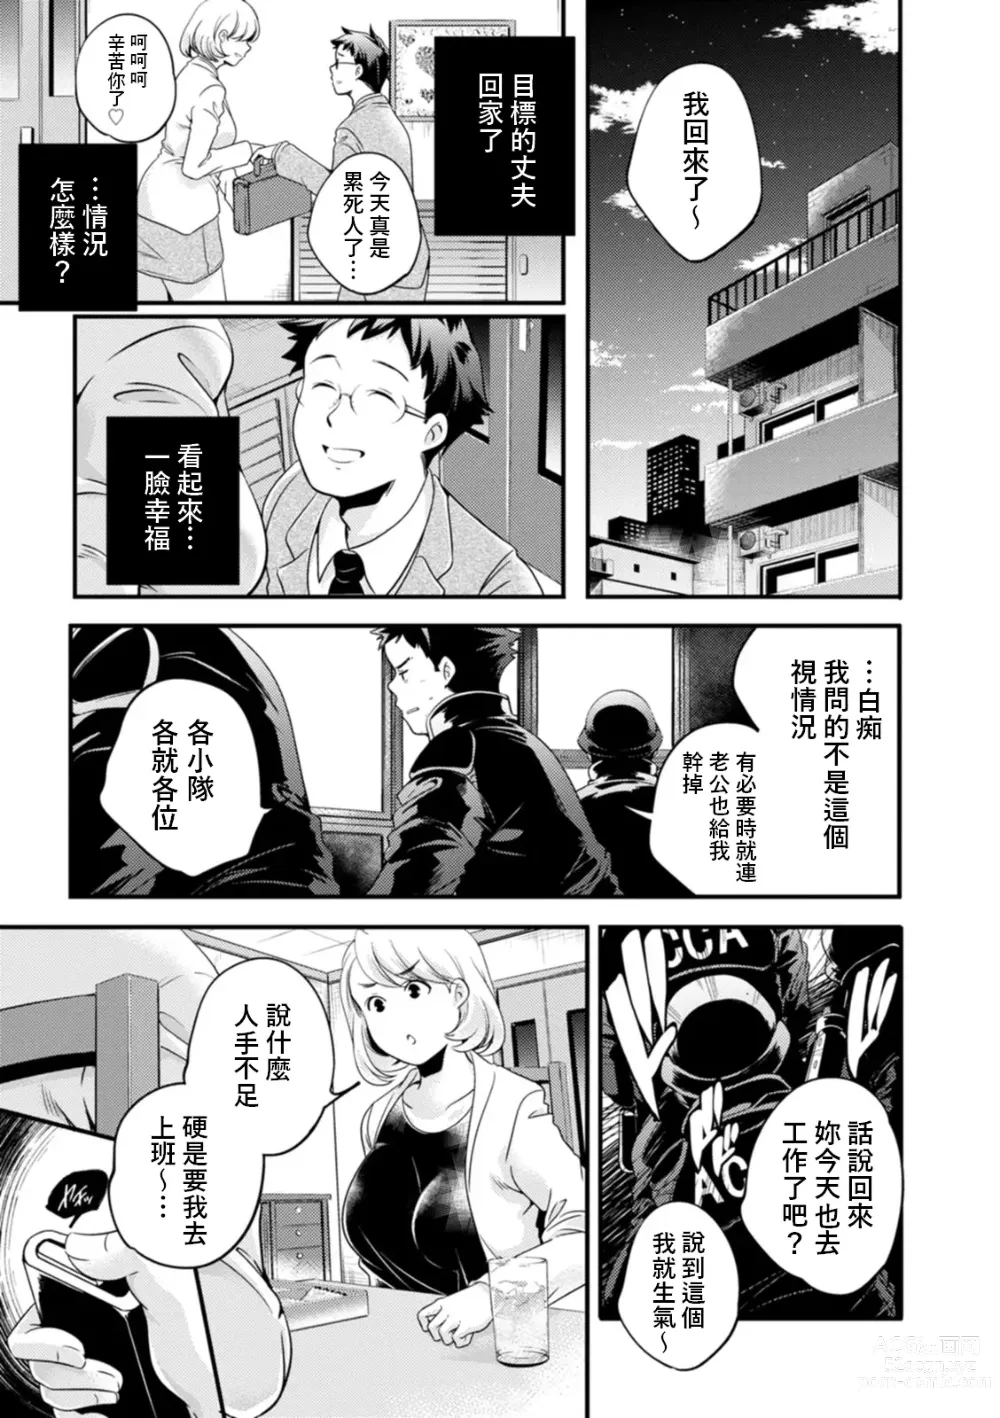 Page 3 of manga Full Metal Mama